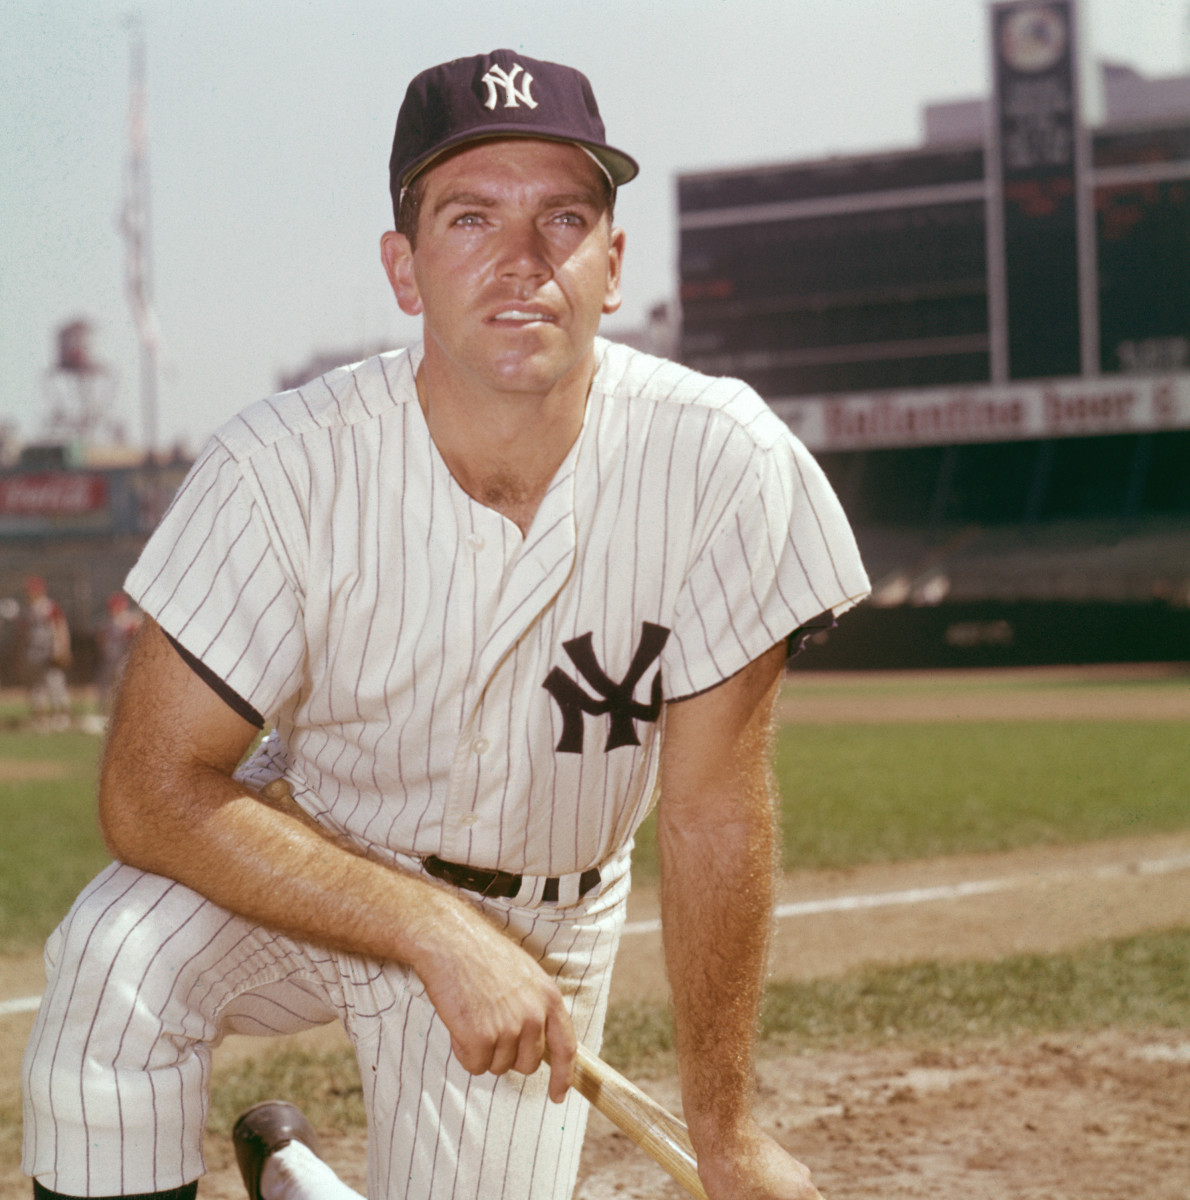 266 photos et images de New York Yankees Store - Getty Images